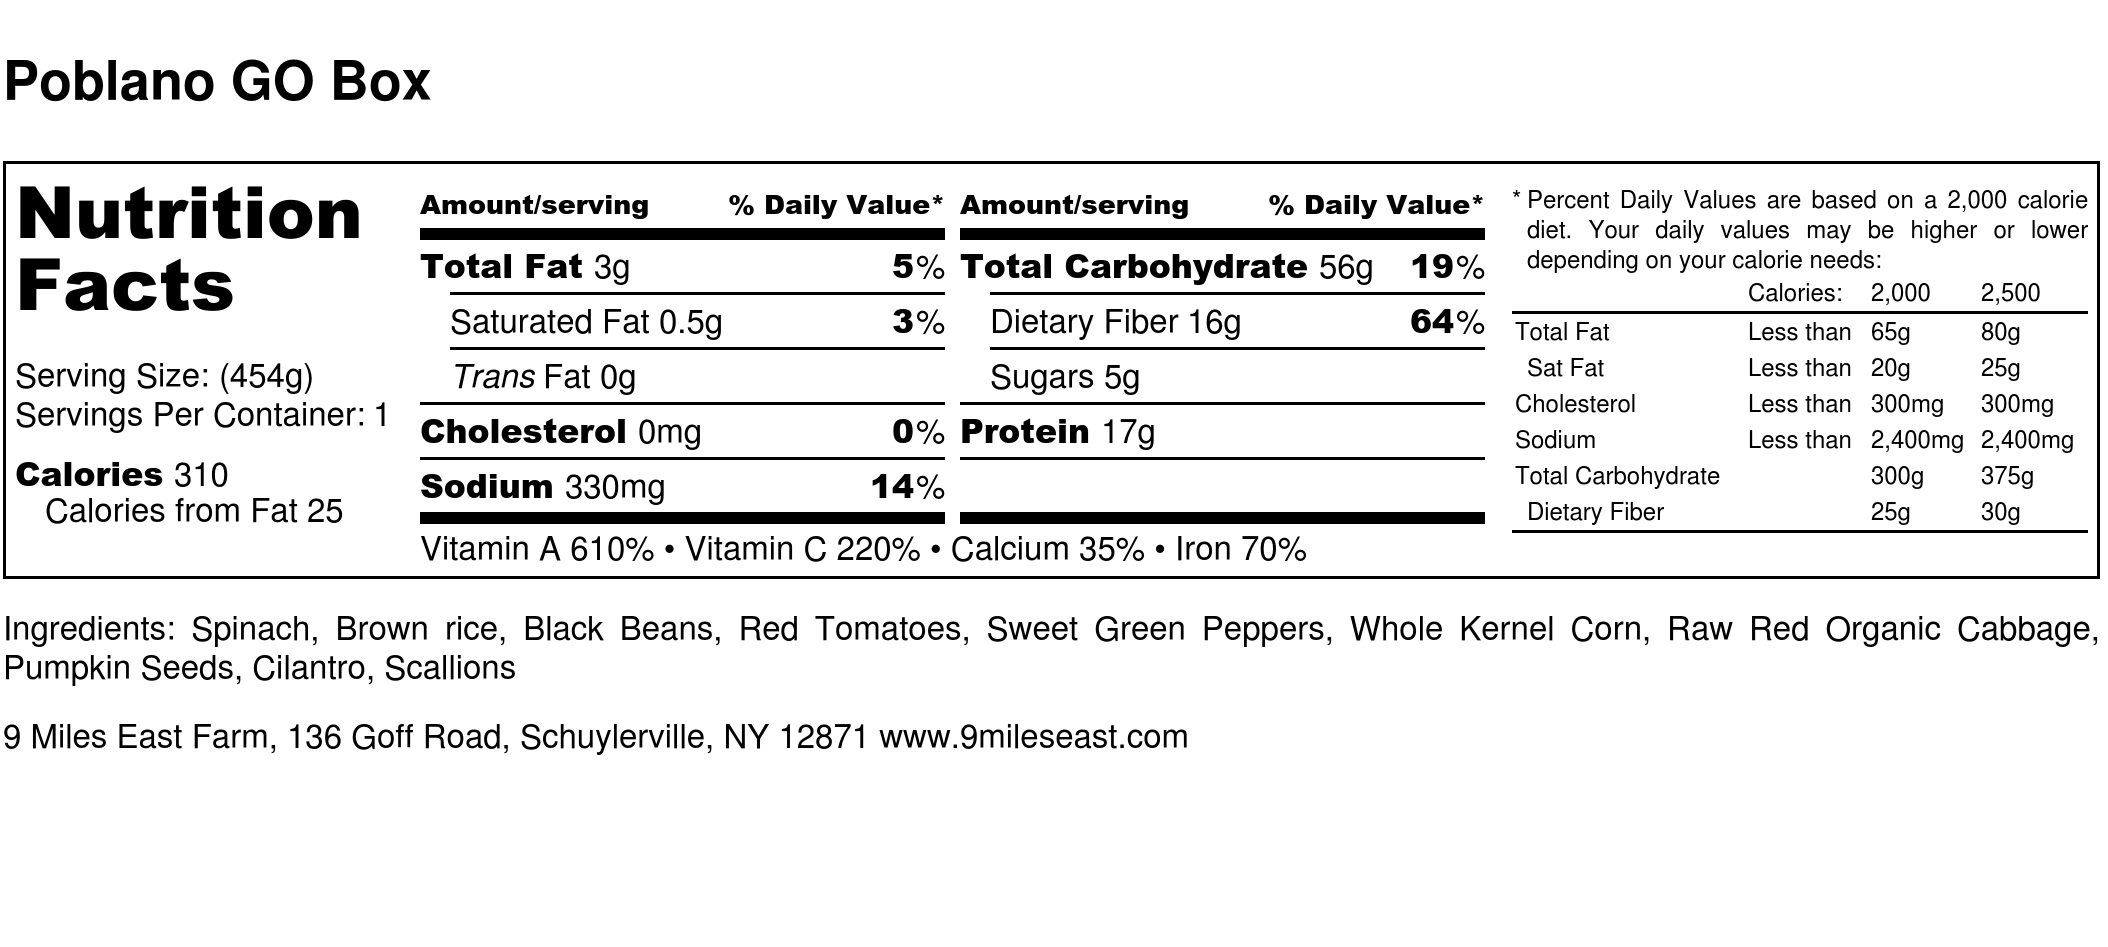 Poblano GO Box - Nutrition Label.jpg